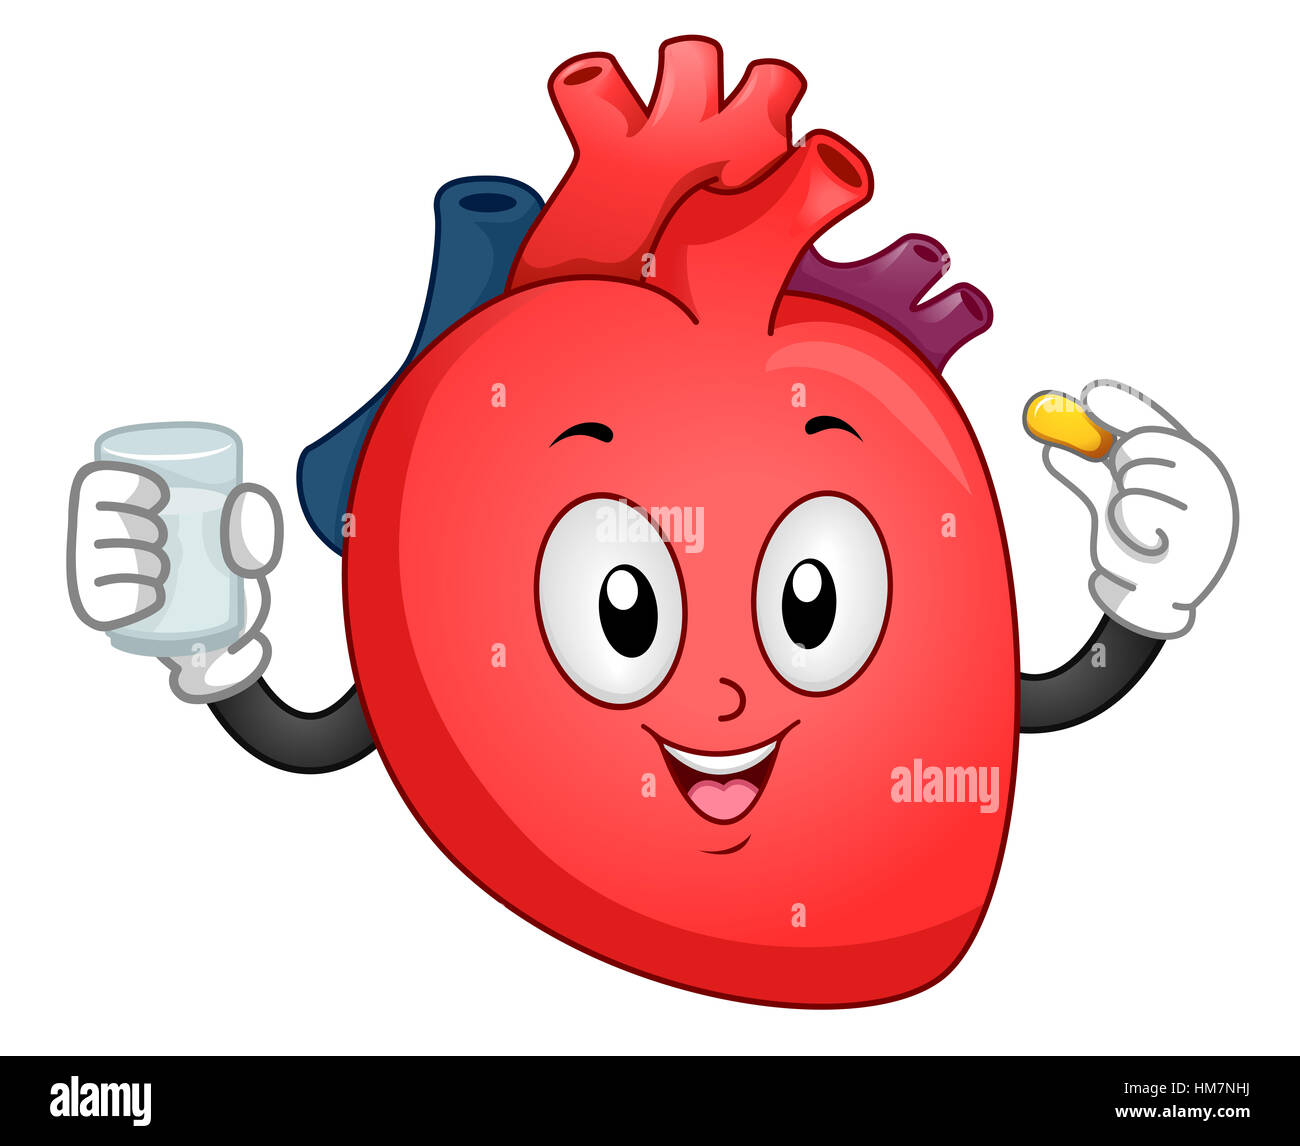 Mascot Illustration of a Heart Taking a Vitamin Supplement Stock Photo